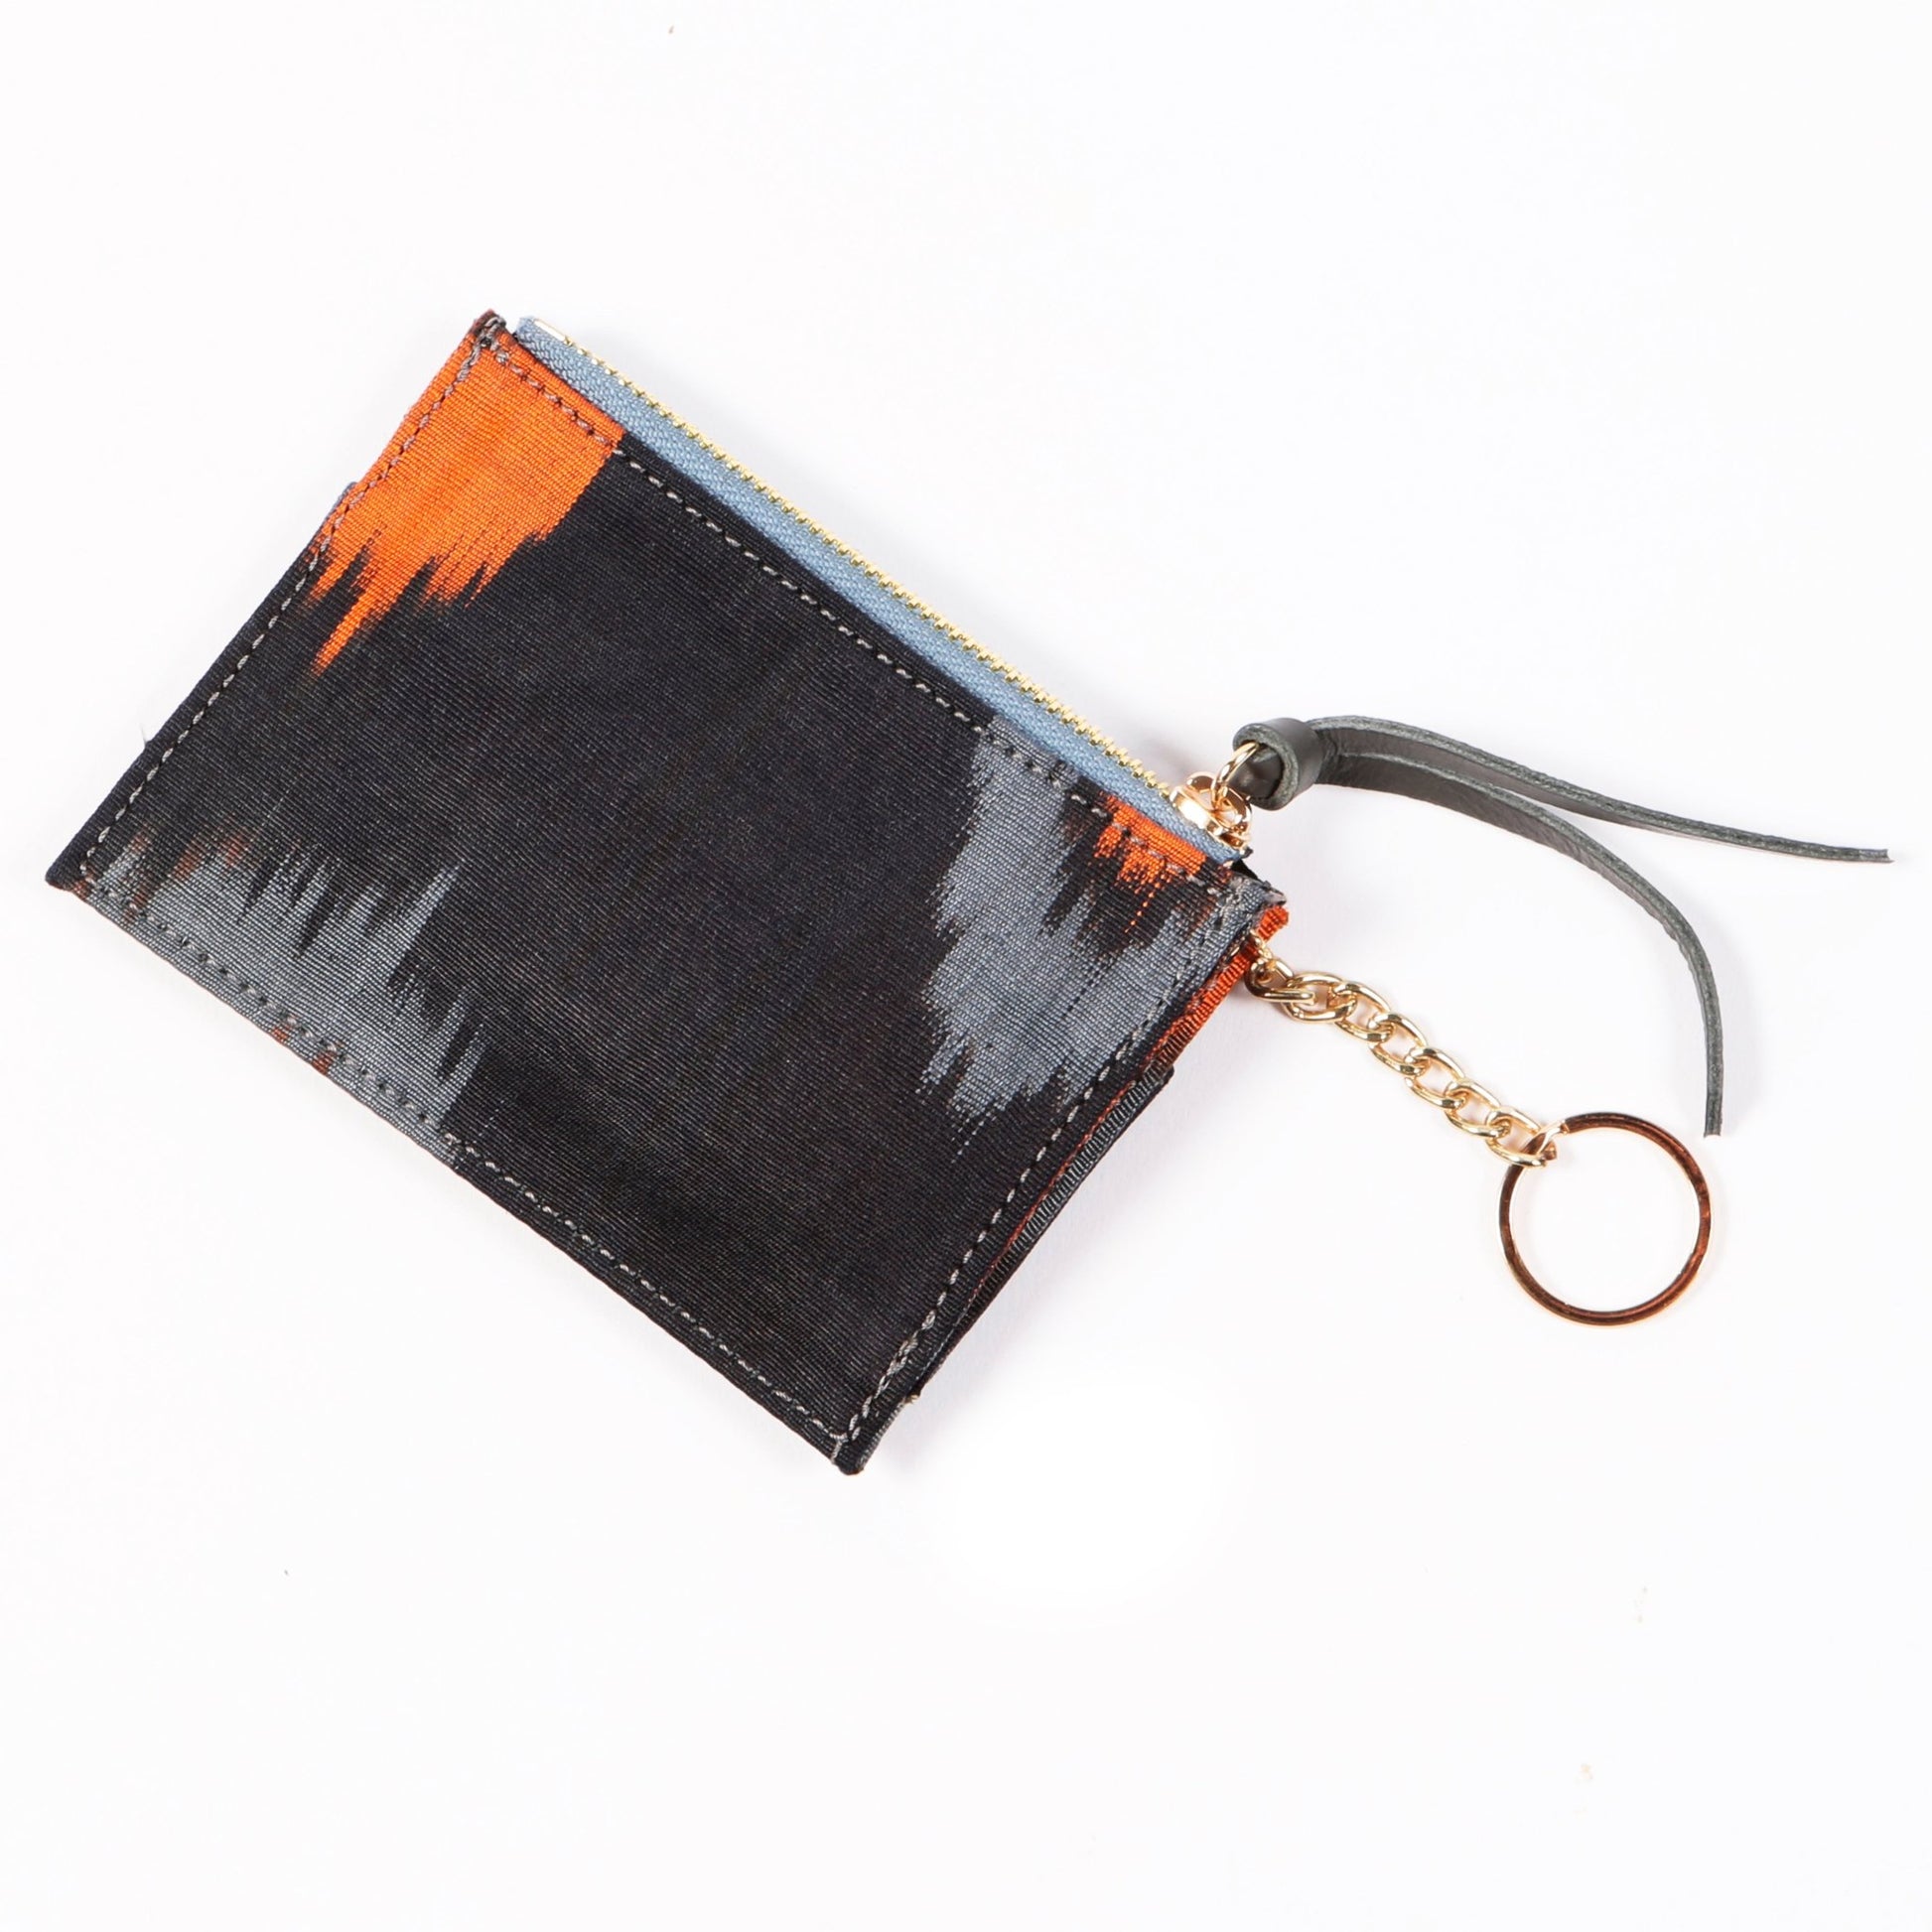 Ikat Mini Wallet Card Holder with keychain - SJW BAGS LONDON